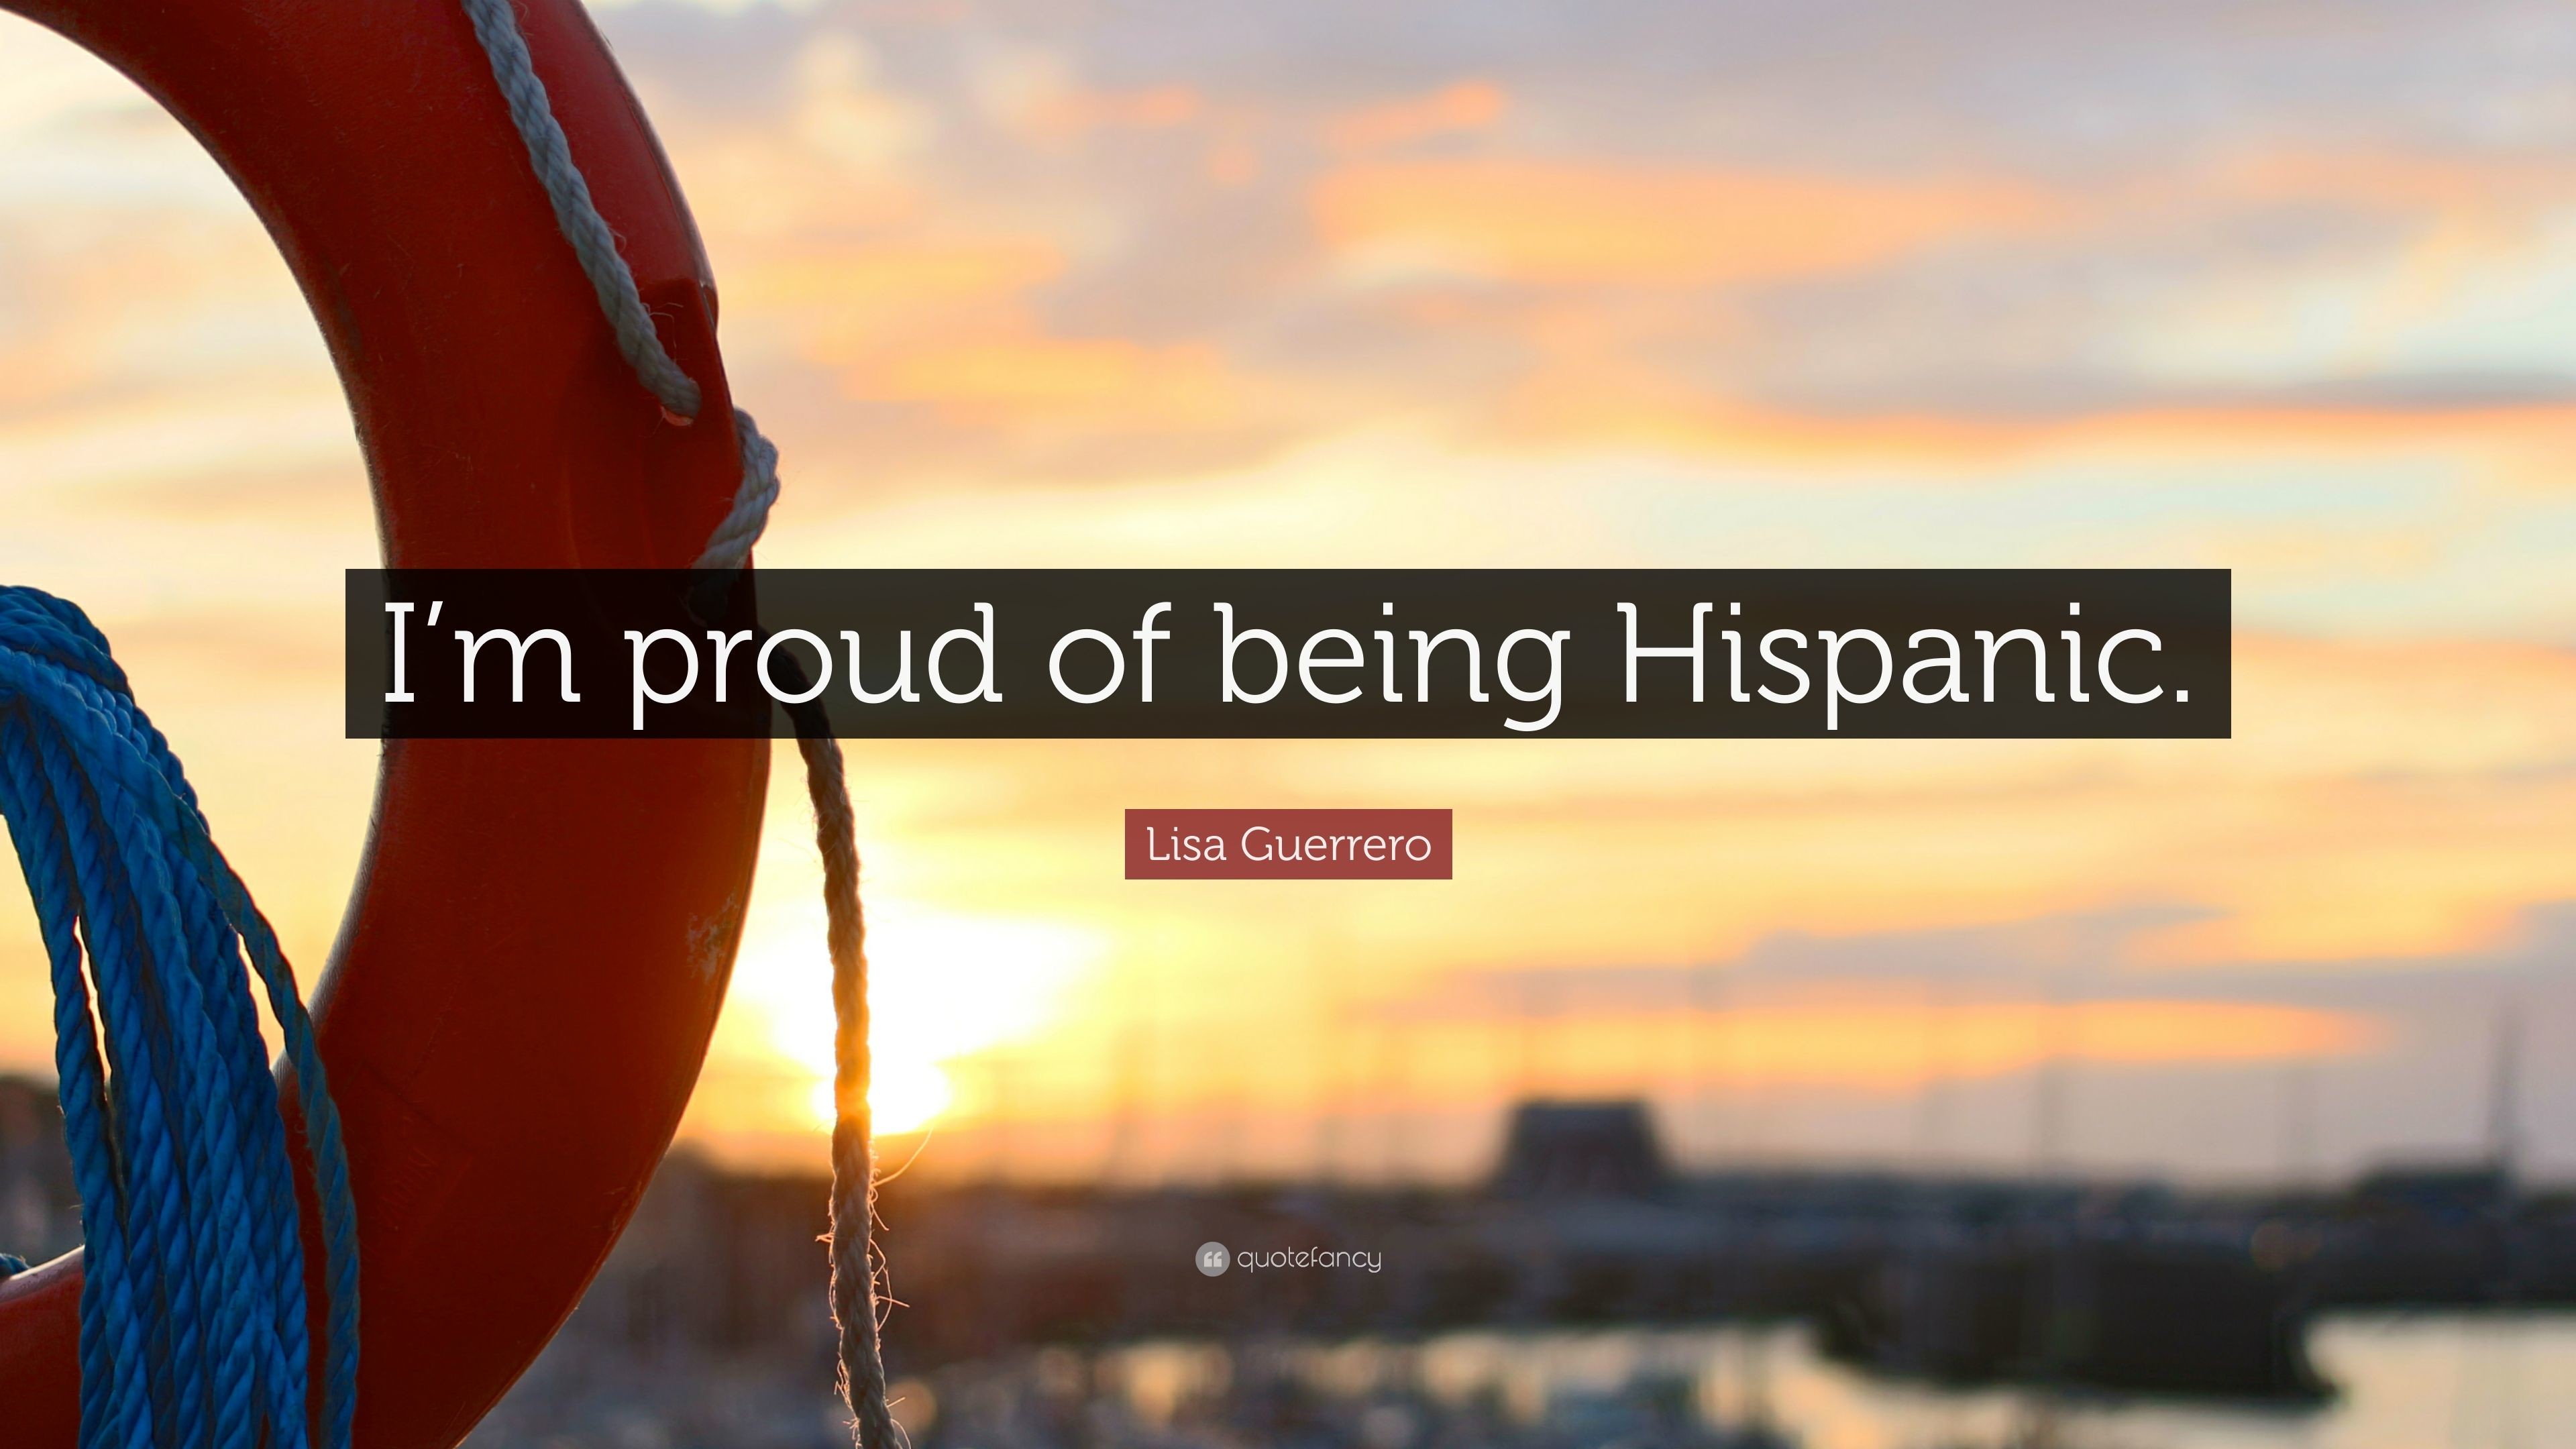 3840x2160 Lisa Guerrero Quote: “I'm proud of being Hispanic.”